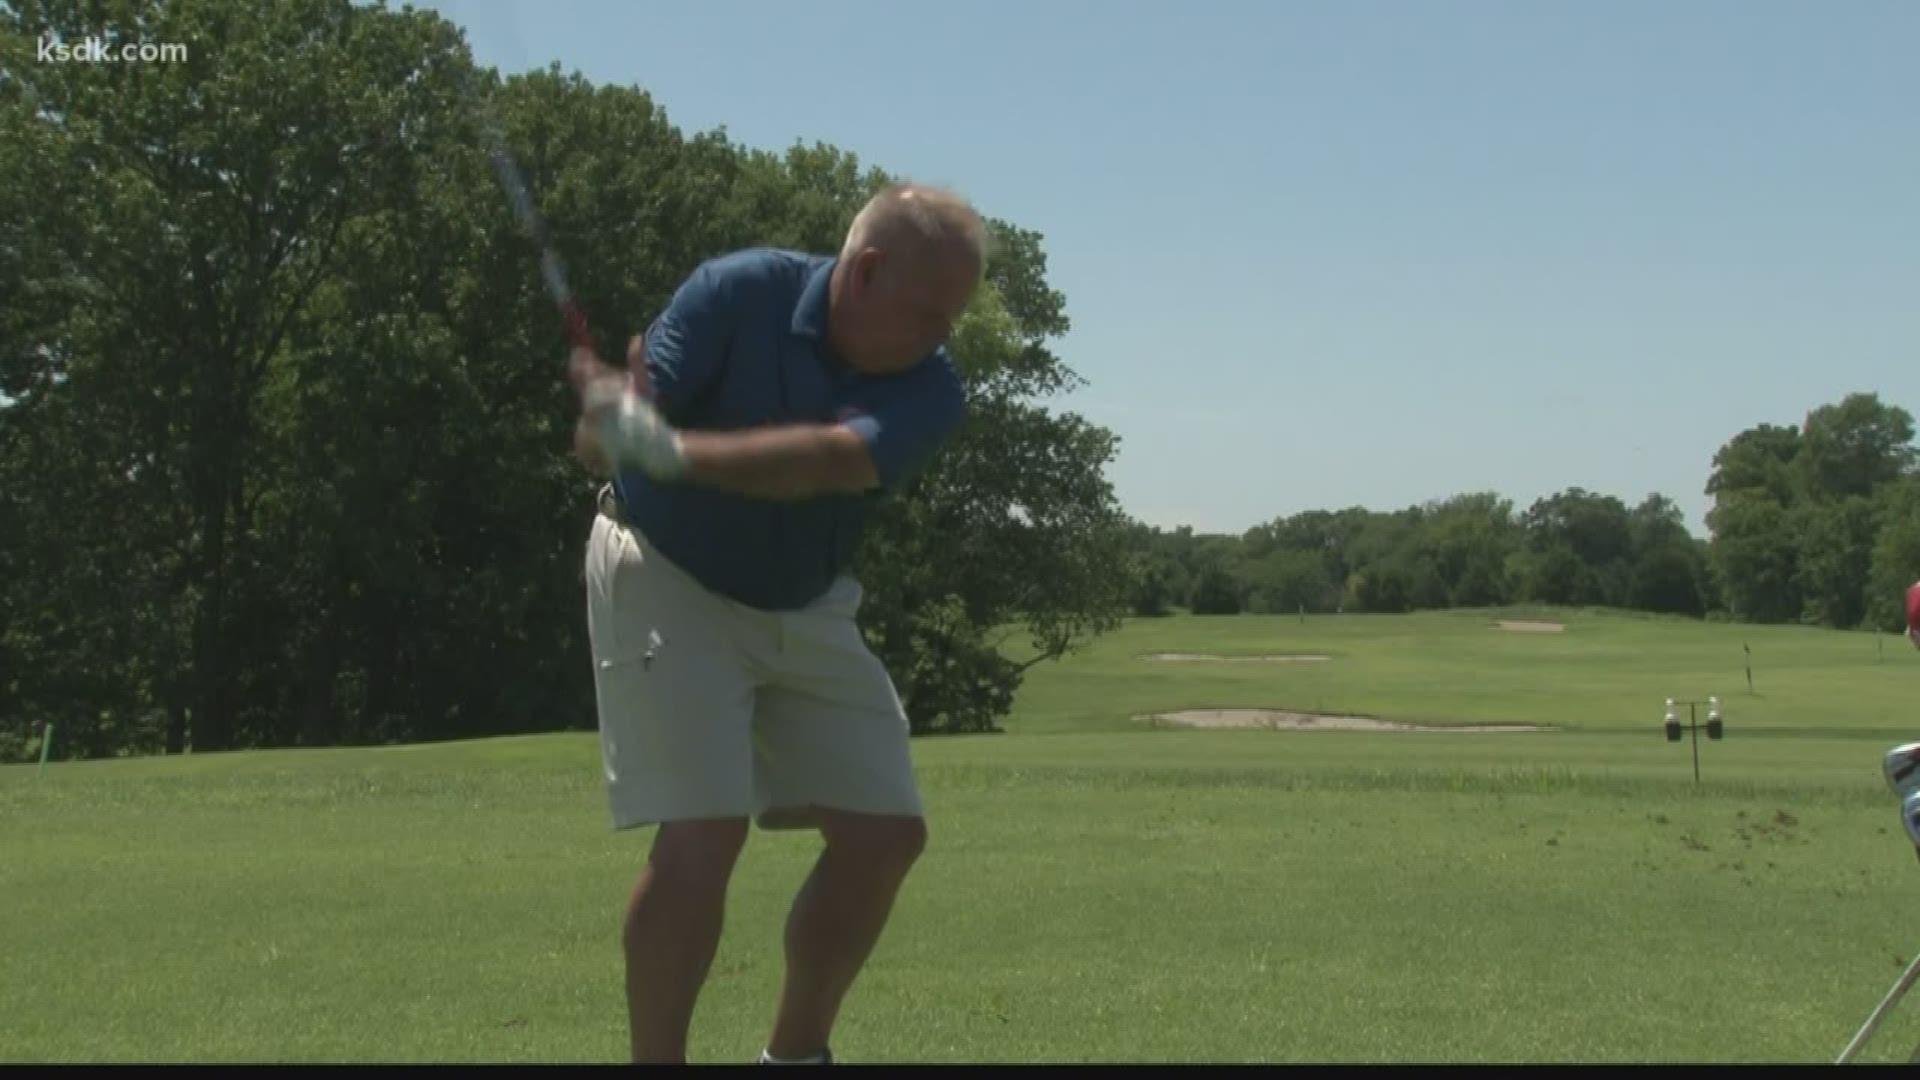 E.J. Brumm Jr. took home the U.S. National Deaf Golf Championship earlier this year.